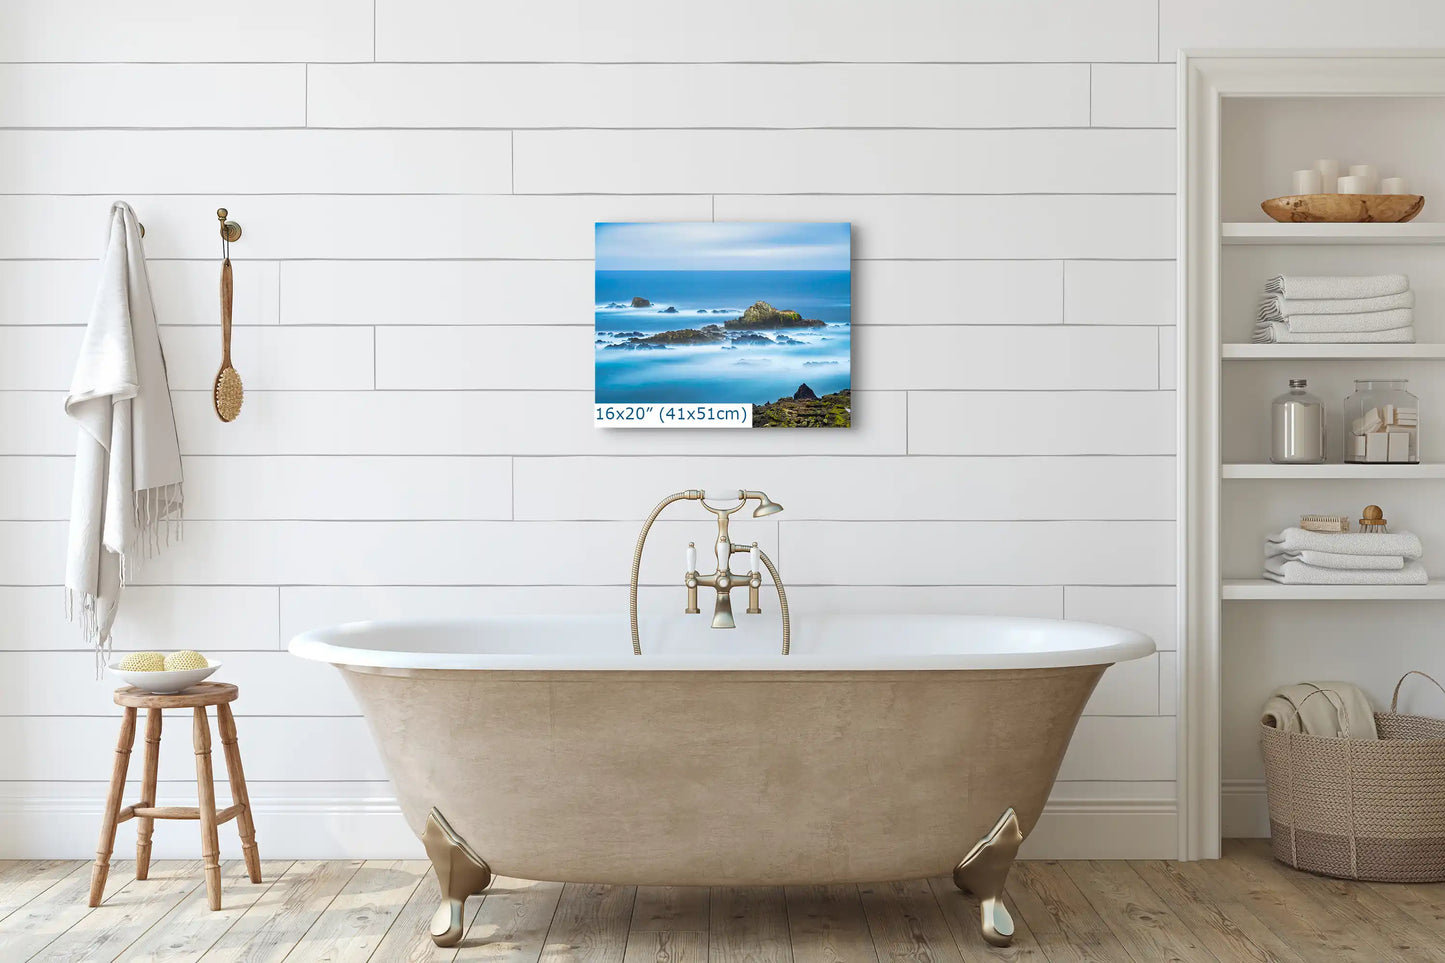 A 16"x20" canvas of Point Lobos seascape adorning a white bathroom wall, enhancing the tranquil bath setting.